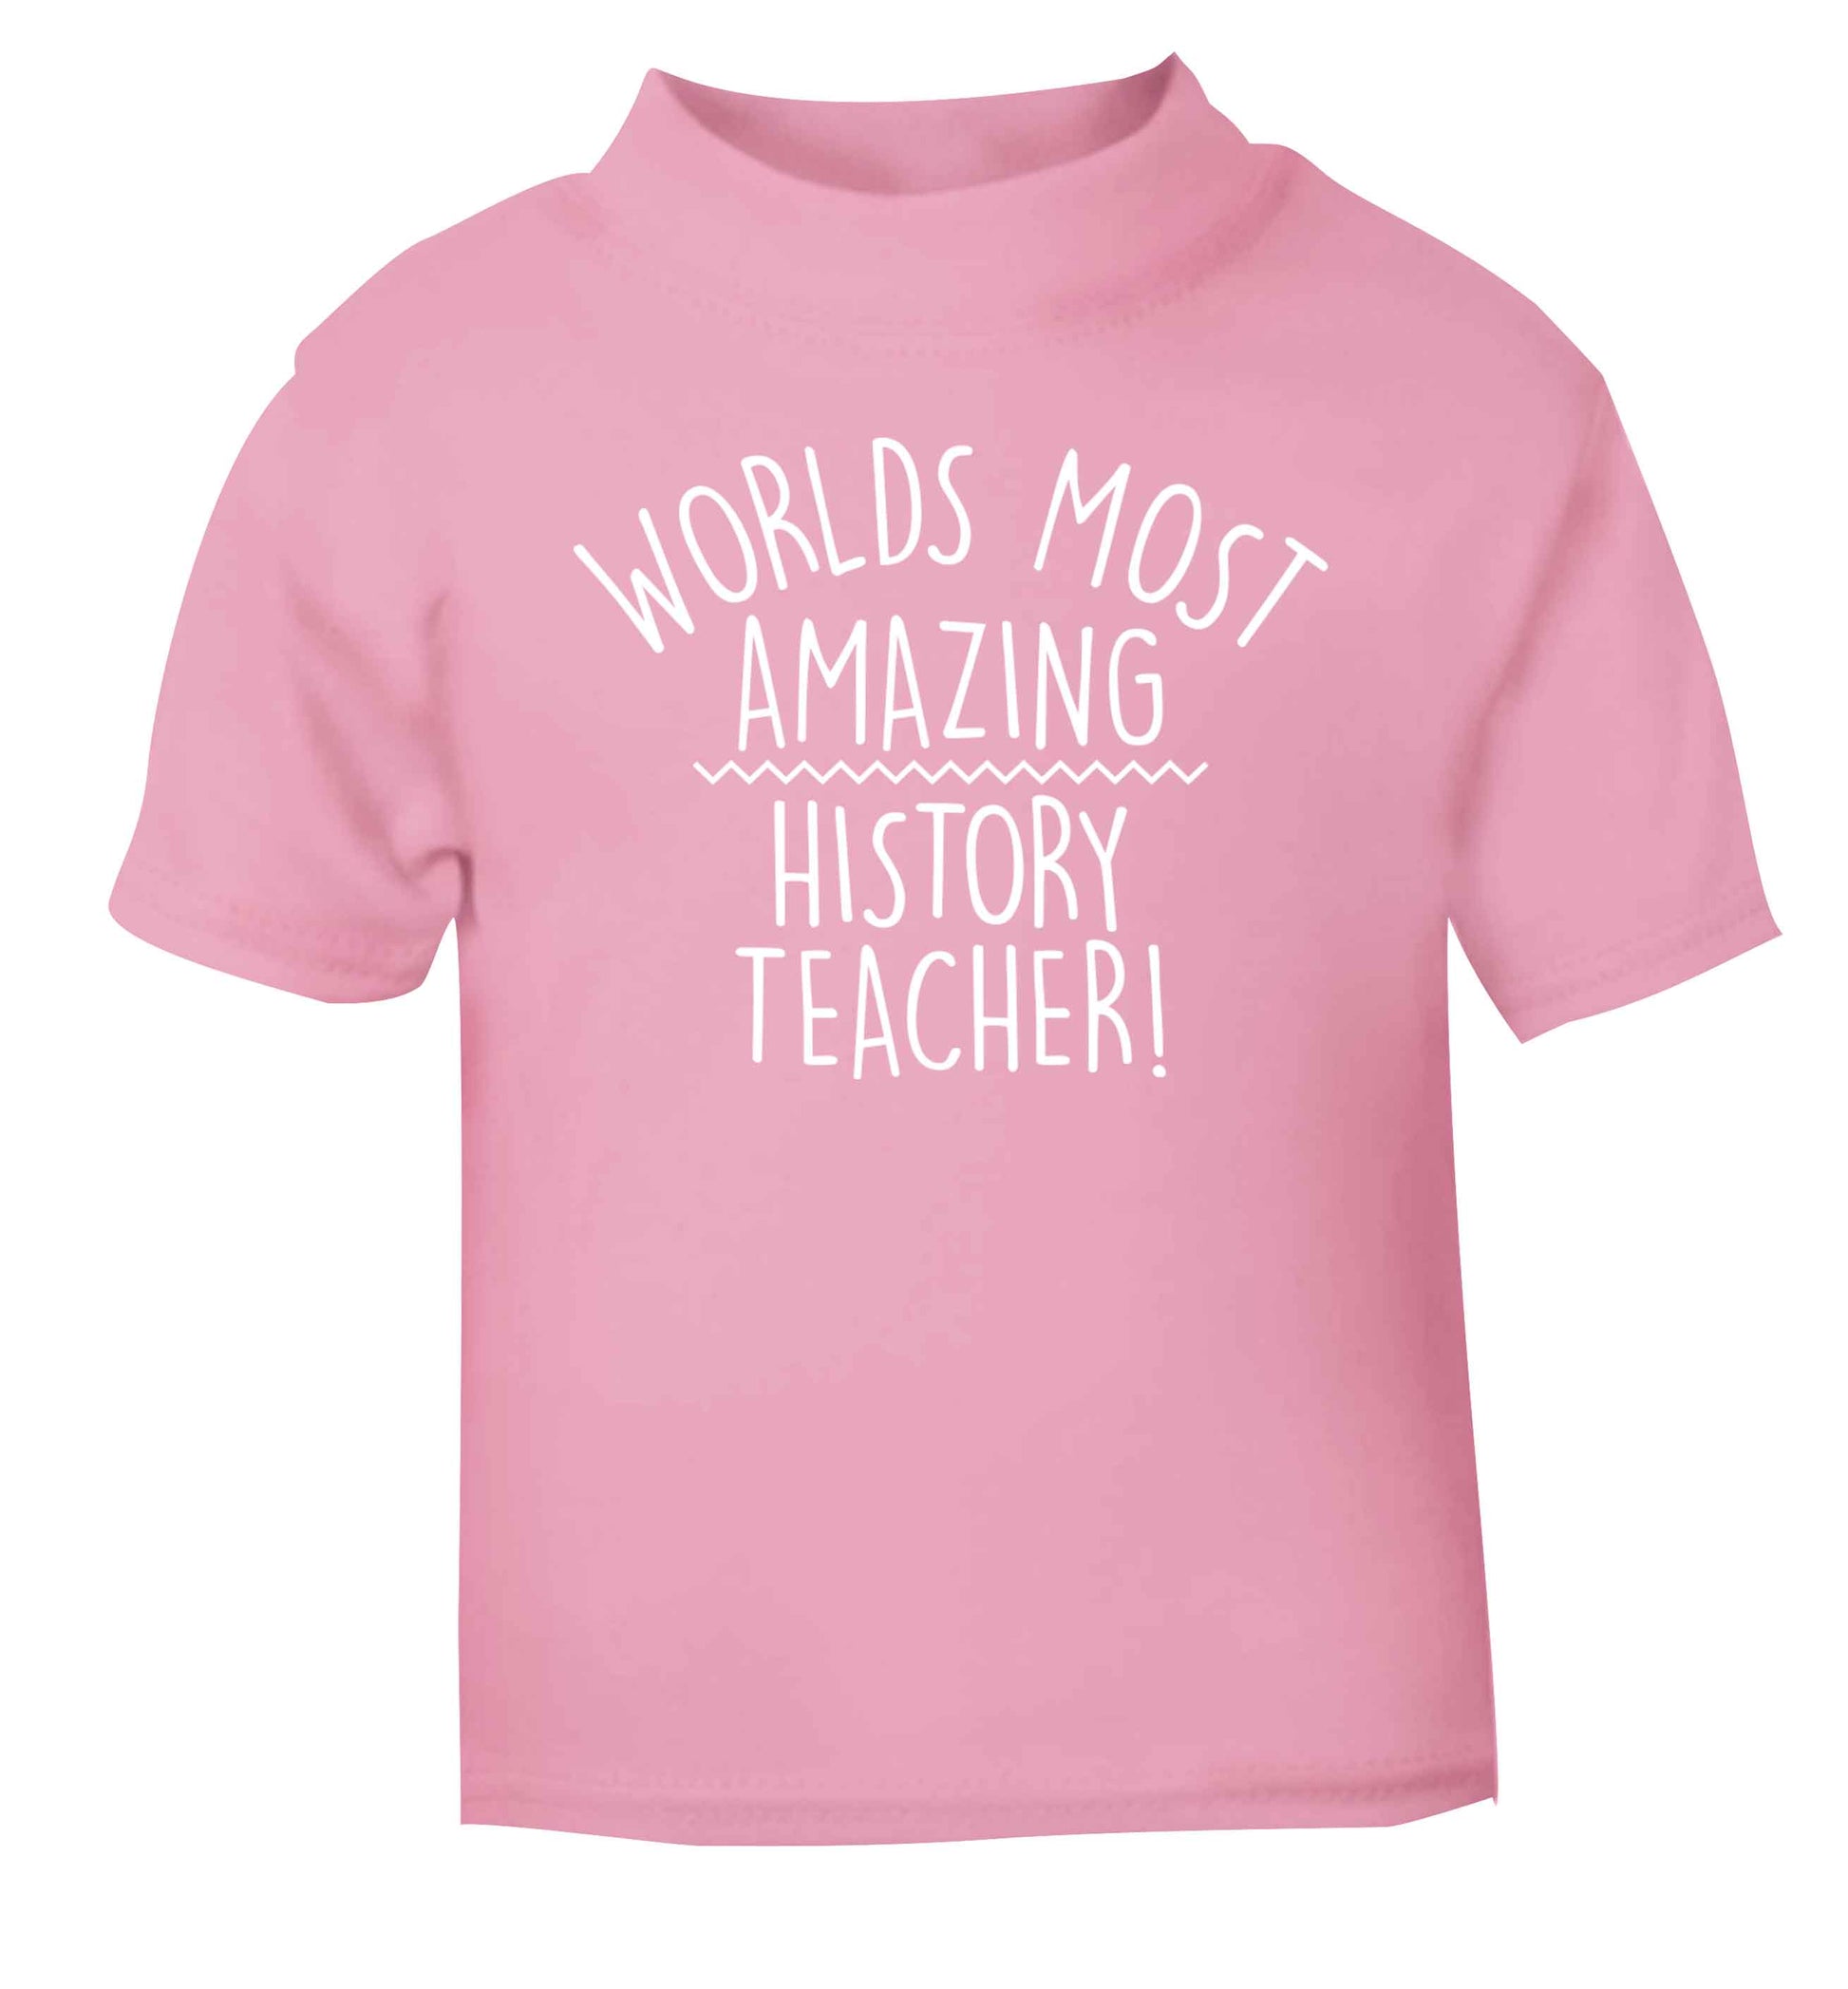 Worlds most amazing History teacher light pink baby toddler Tshirt 2 Years